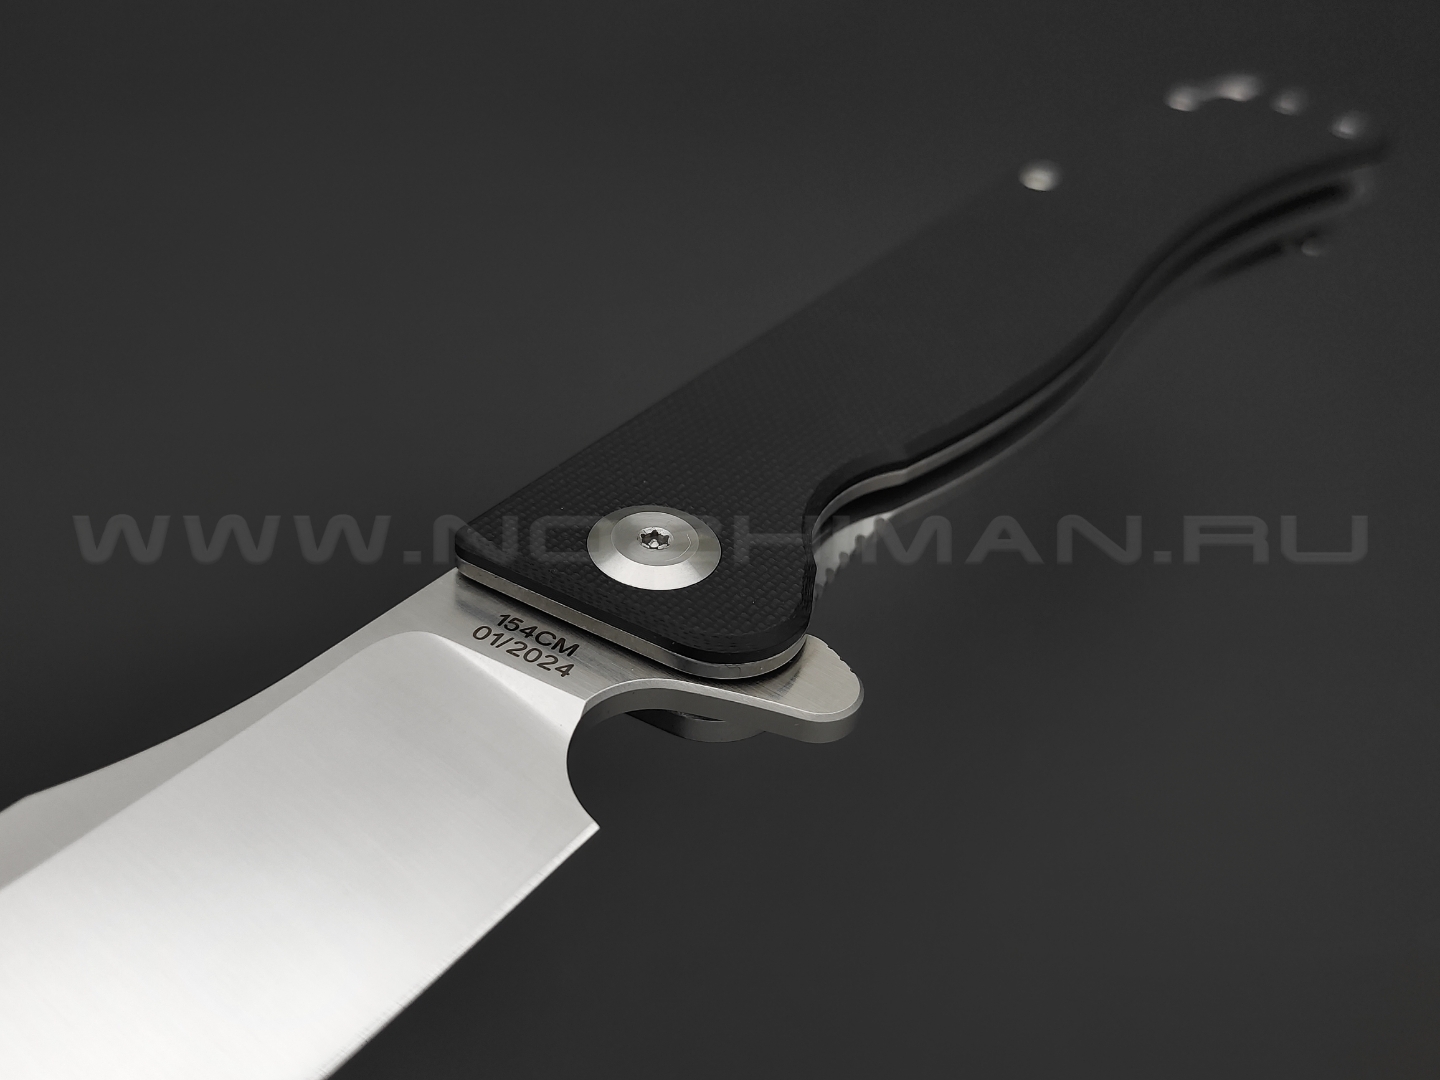 Daggerr нож Condor сталь 154СМ satin, рукоять G10 black